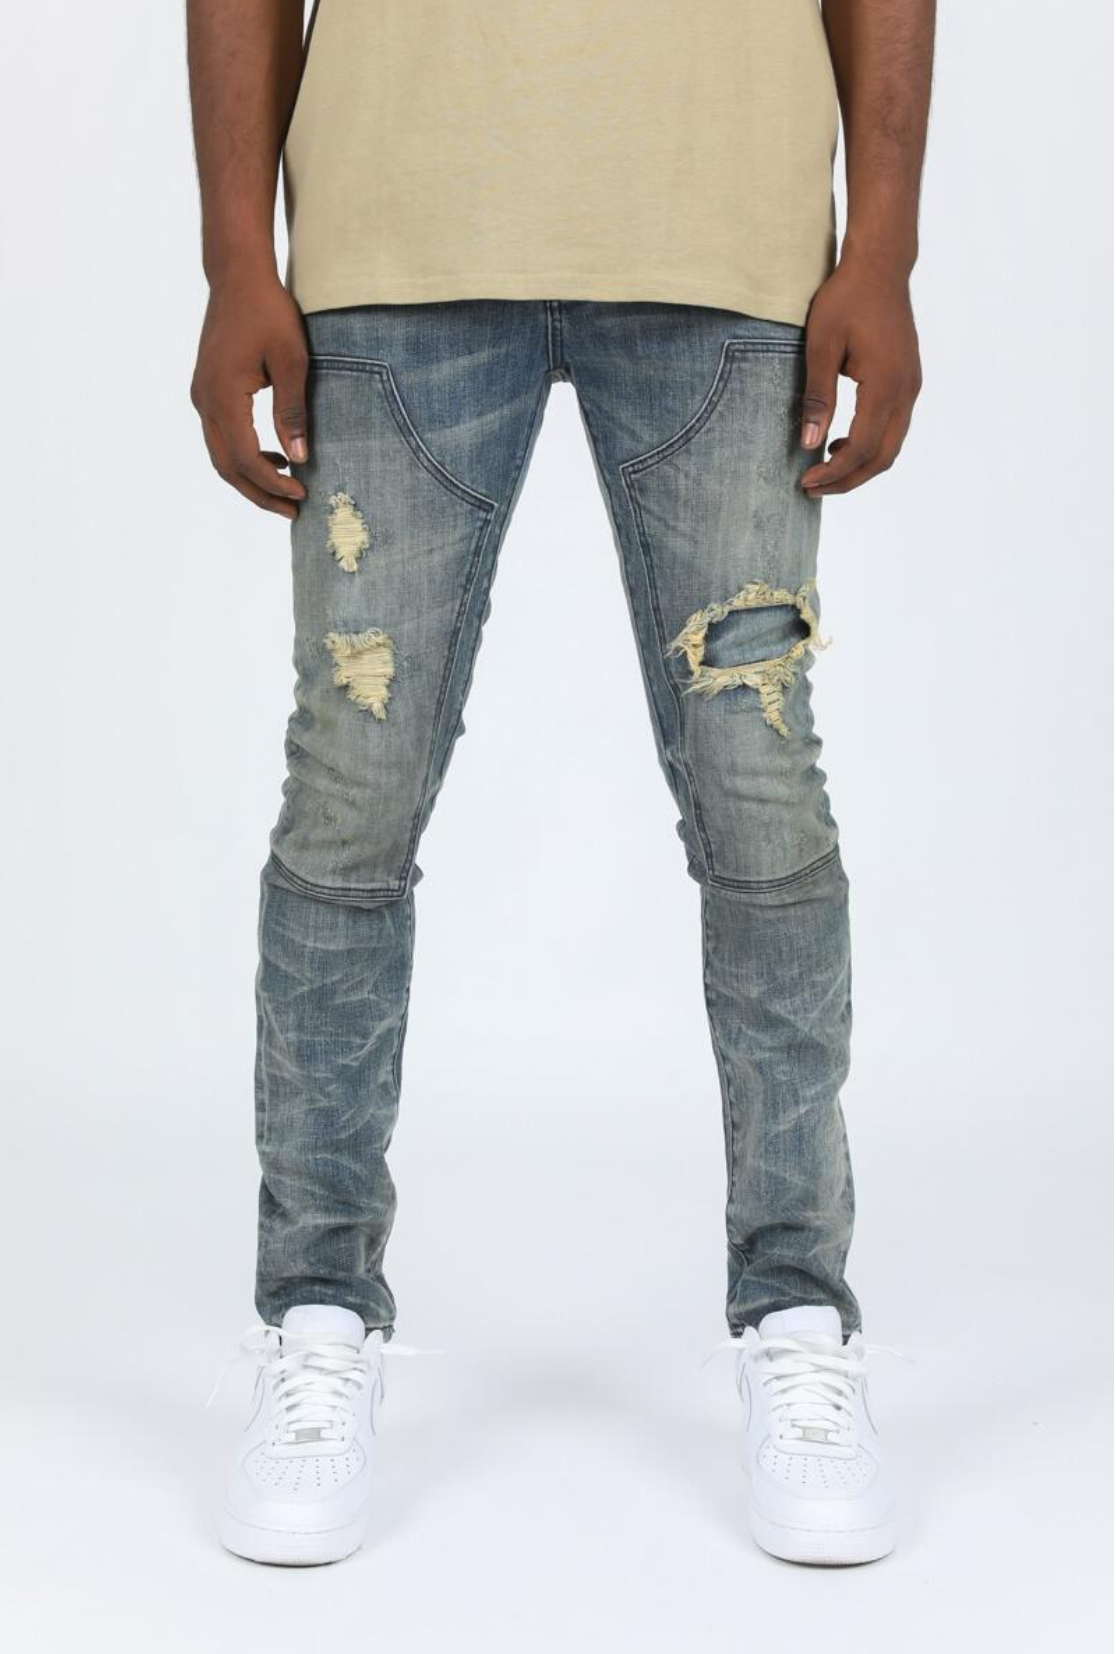 GFTD Denim Jeans